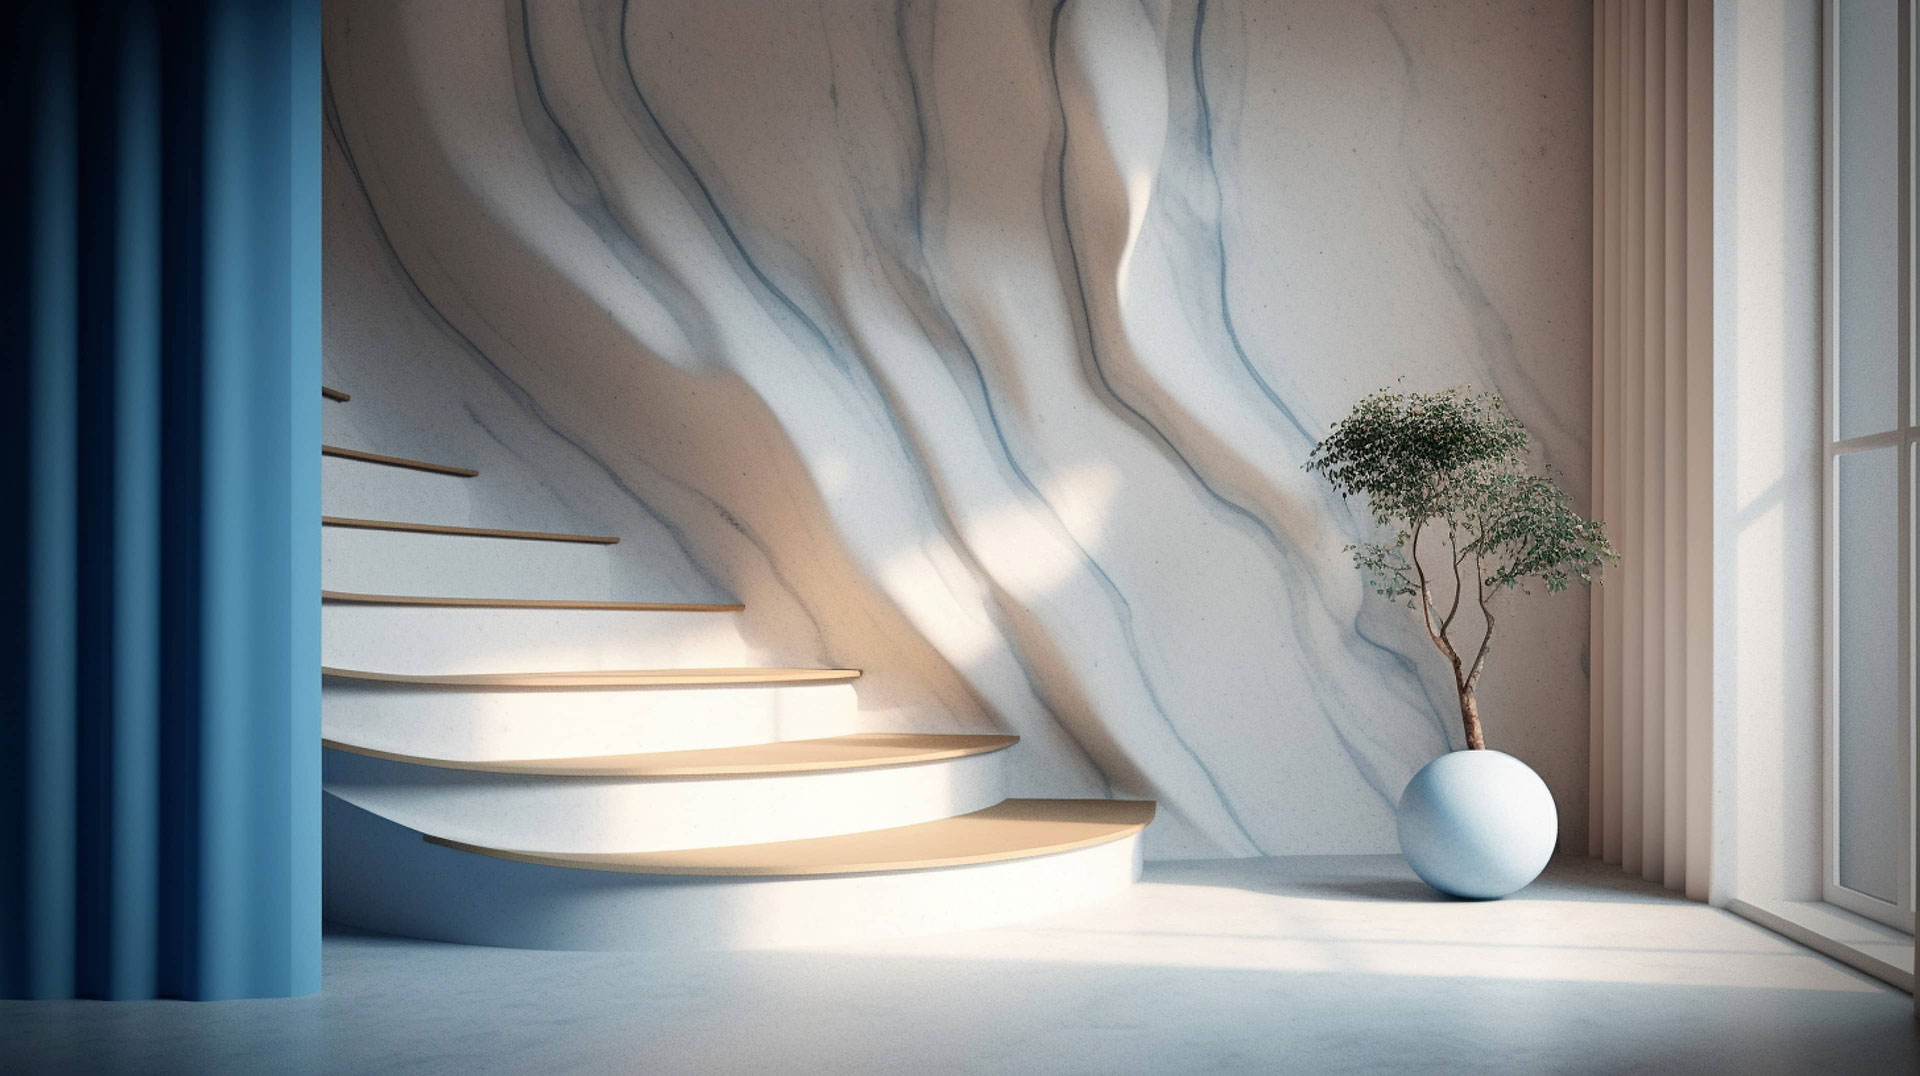 mur en marbre bleu pour habiller un escalier